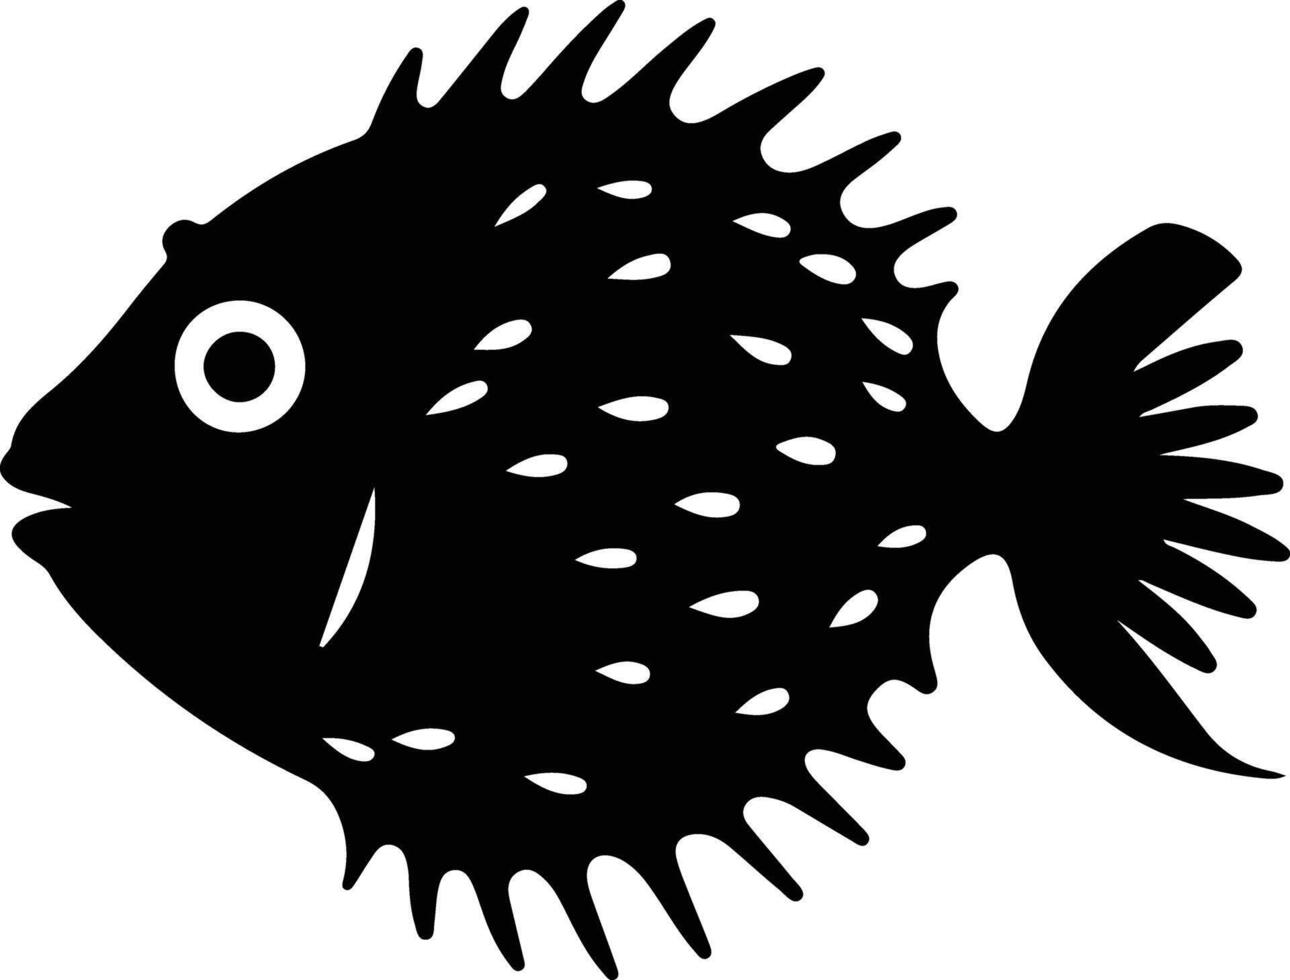 Kugelfisch schwarz Silhouette vektor